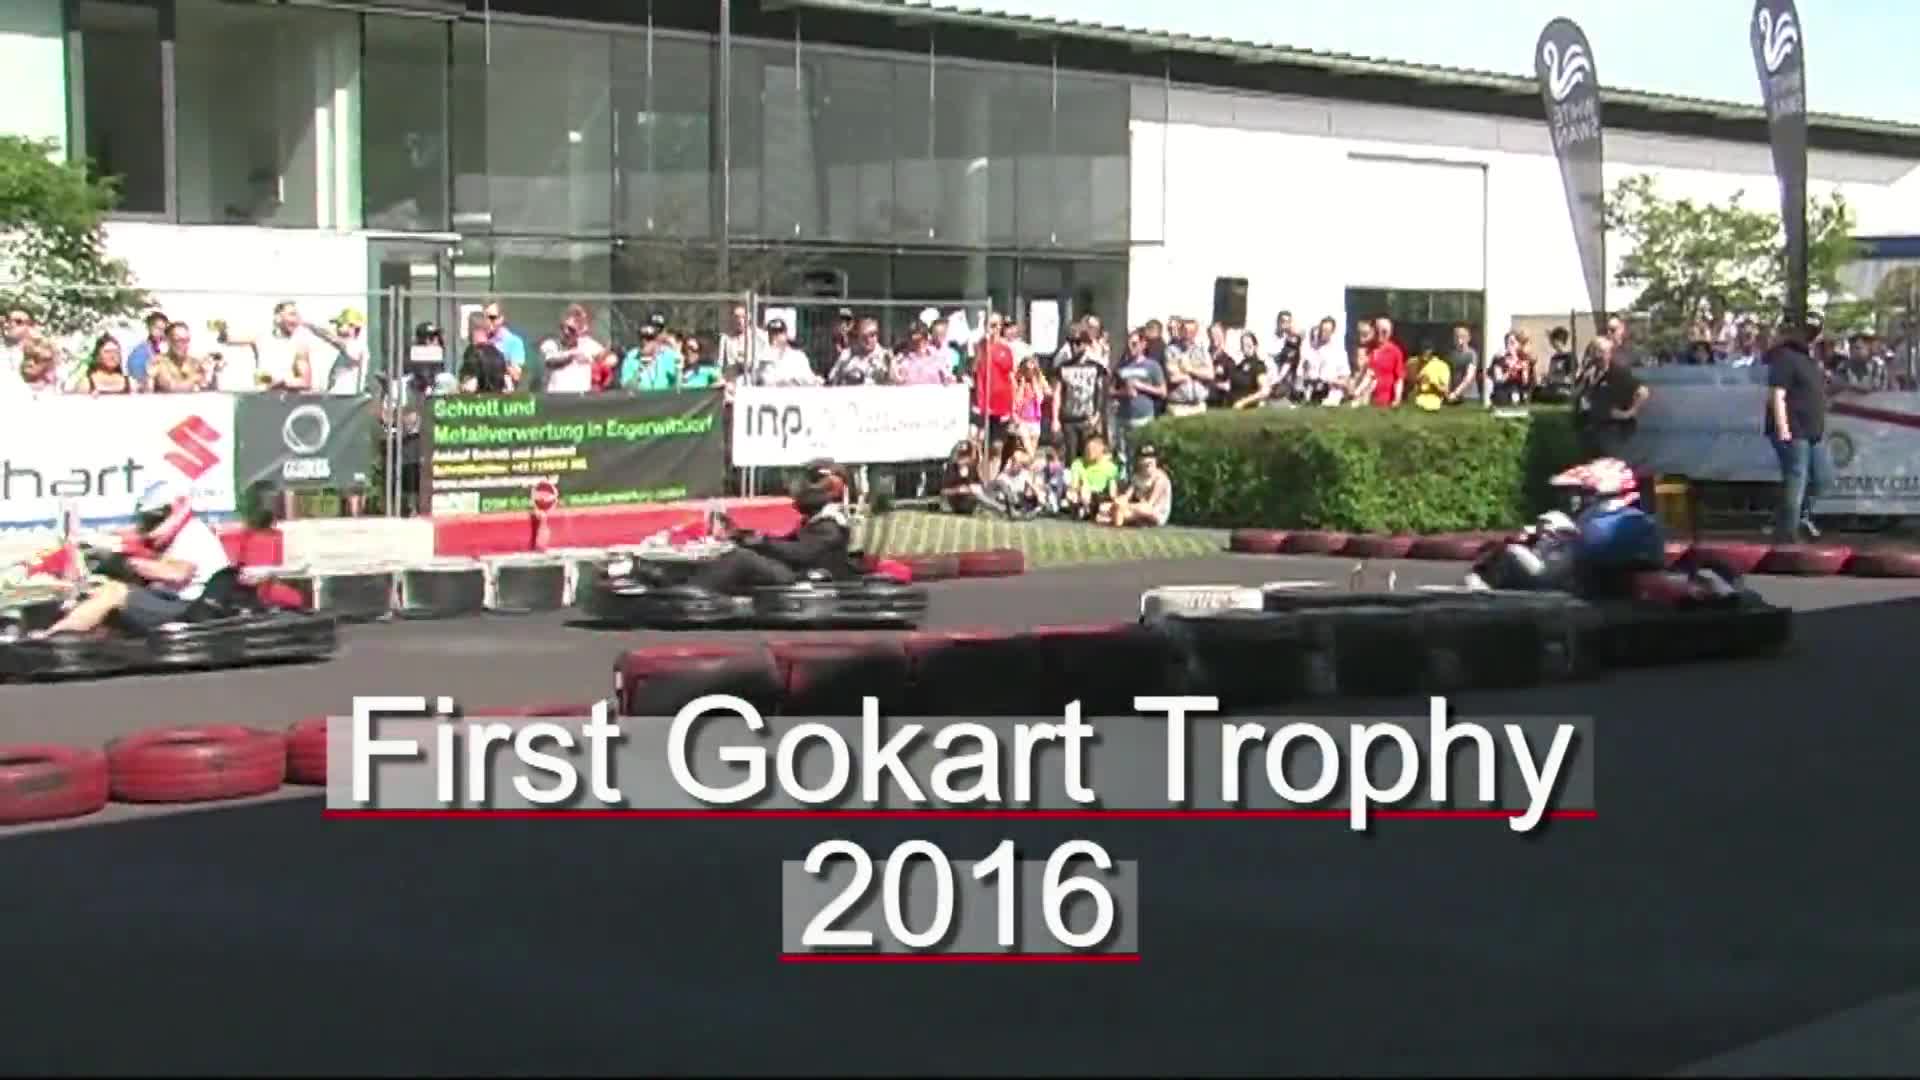 First Gokart Trophy 2016